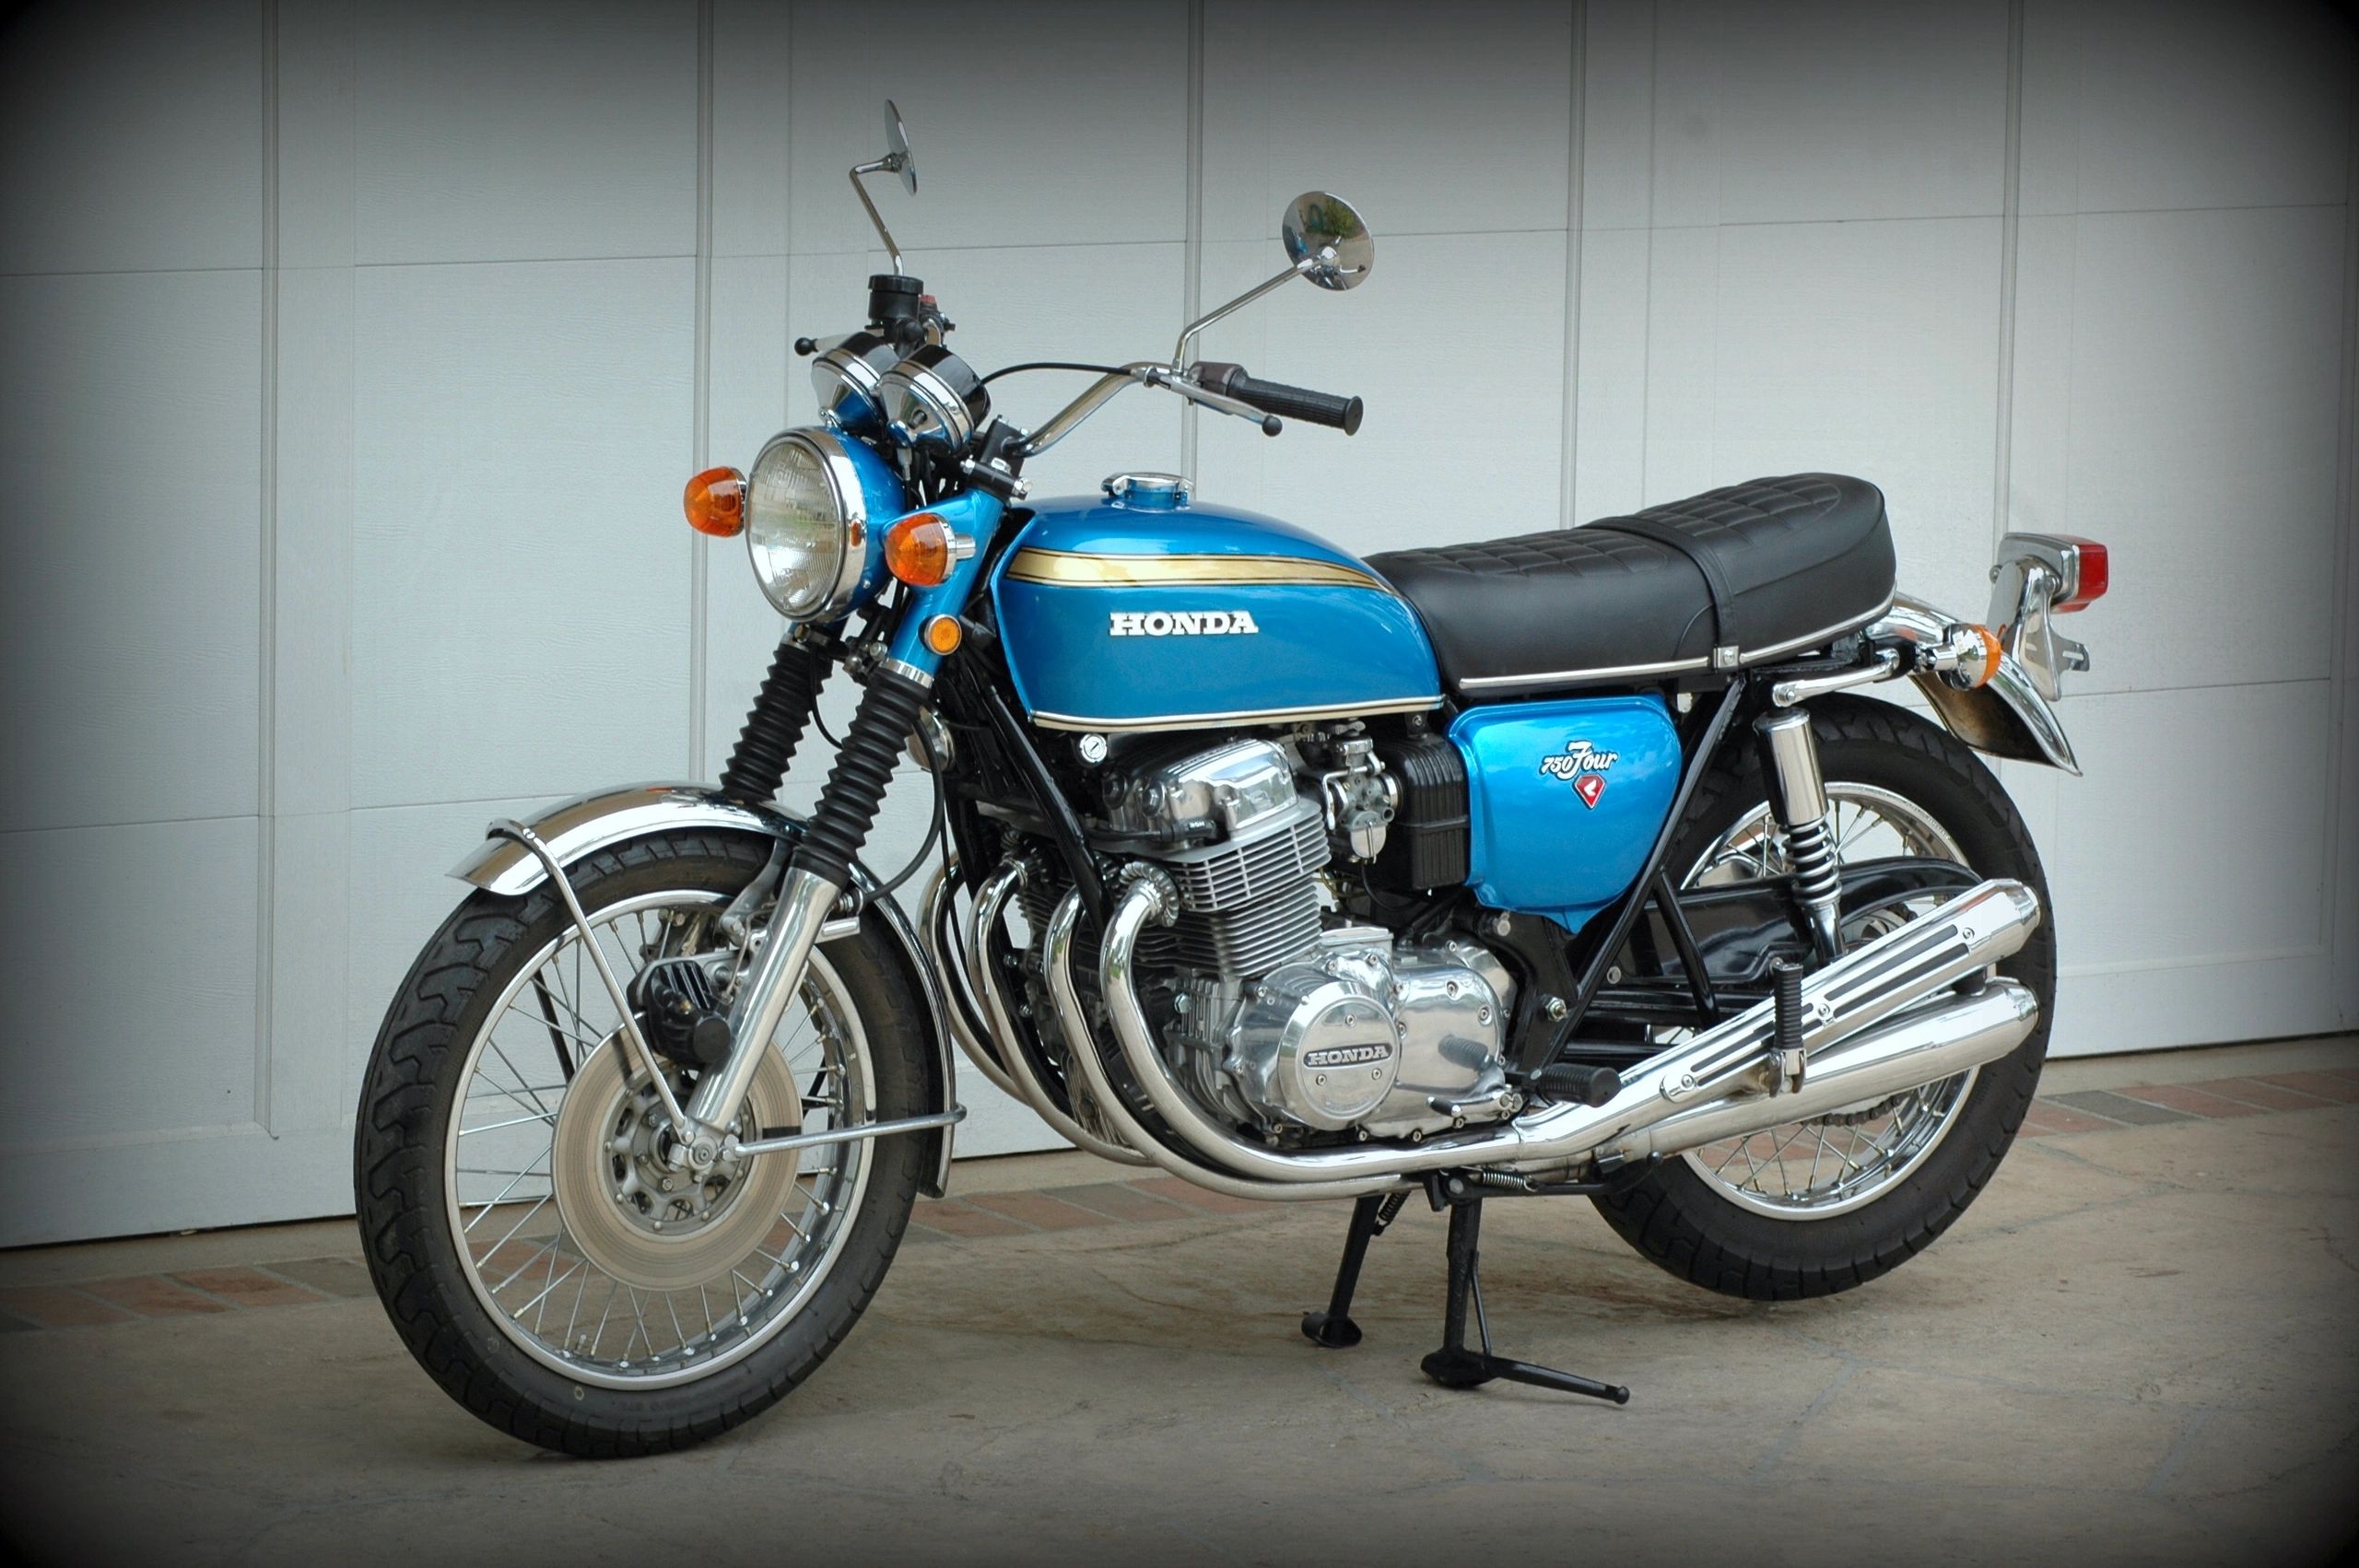 1971 Honda CB750 K1 restored street Super bike